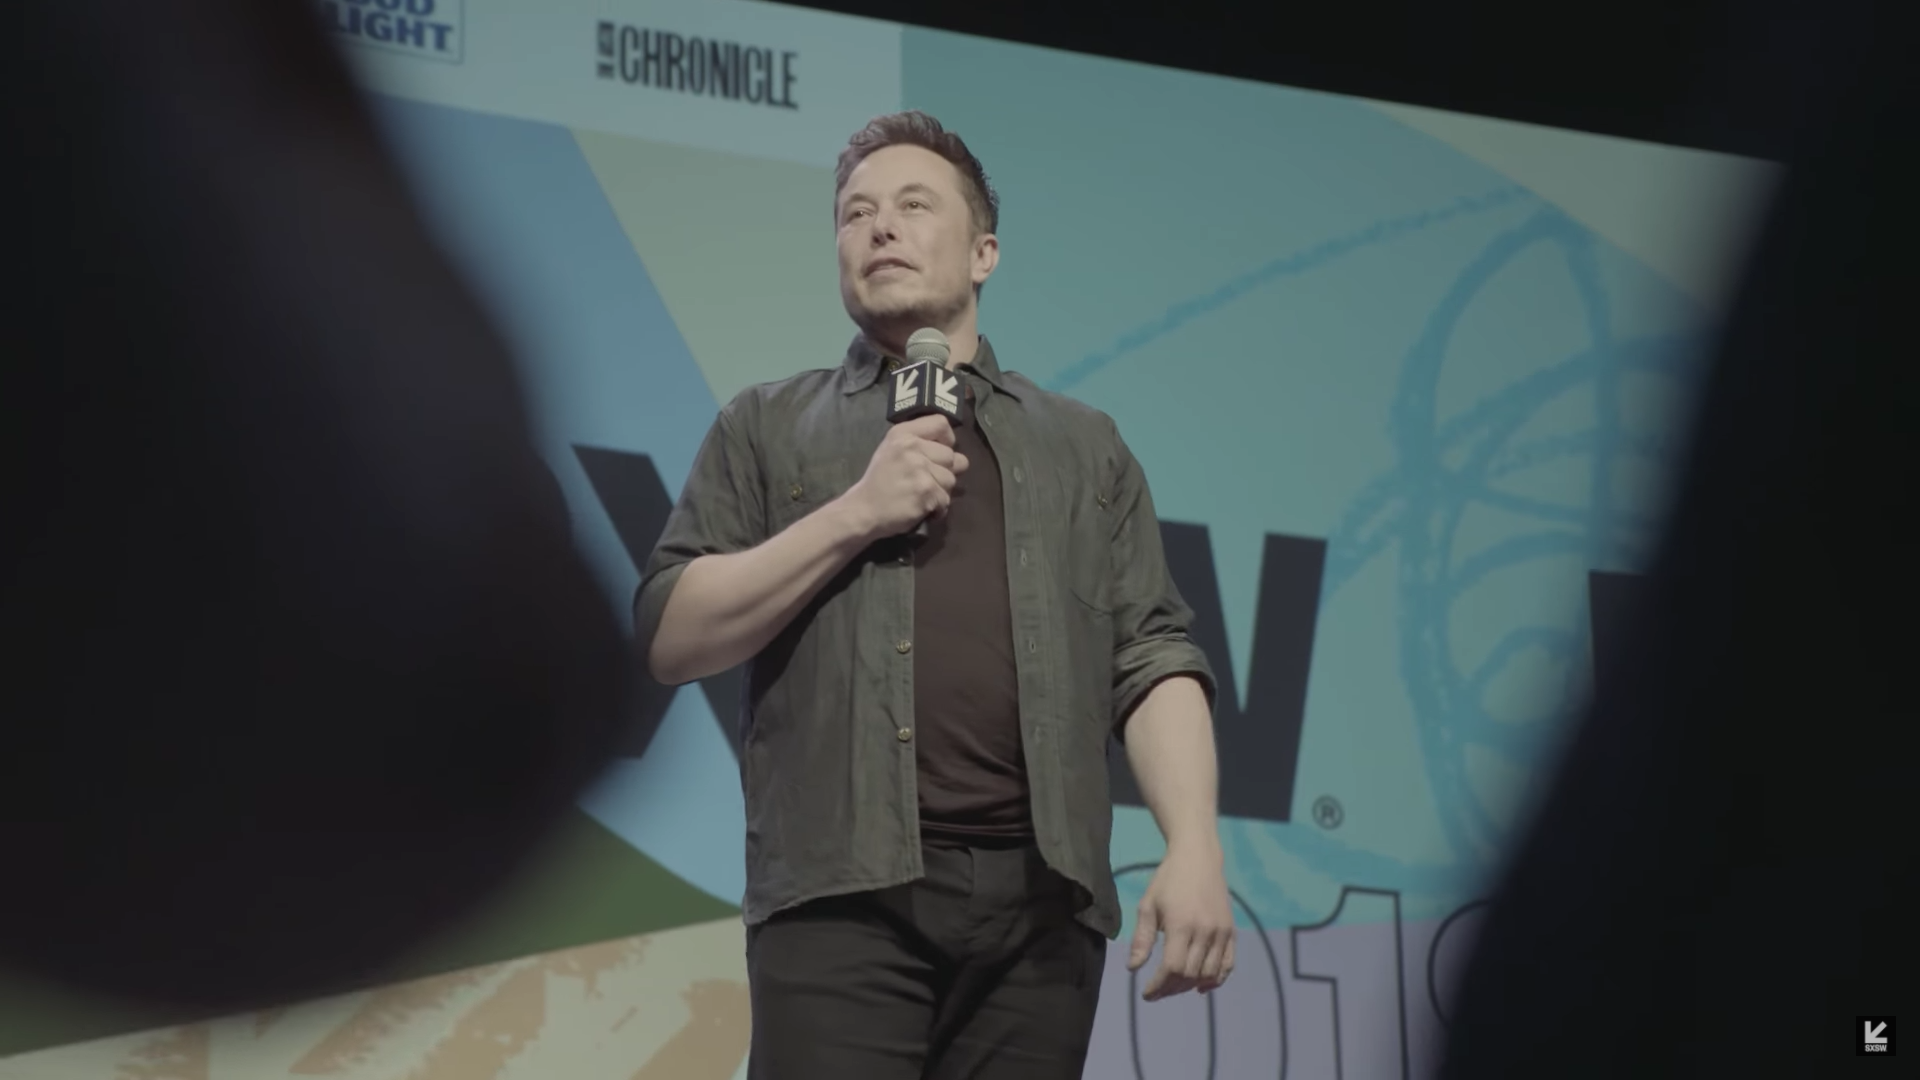 Elon Musk at SXSW 2018. Photo by: SXSW / YouTube